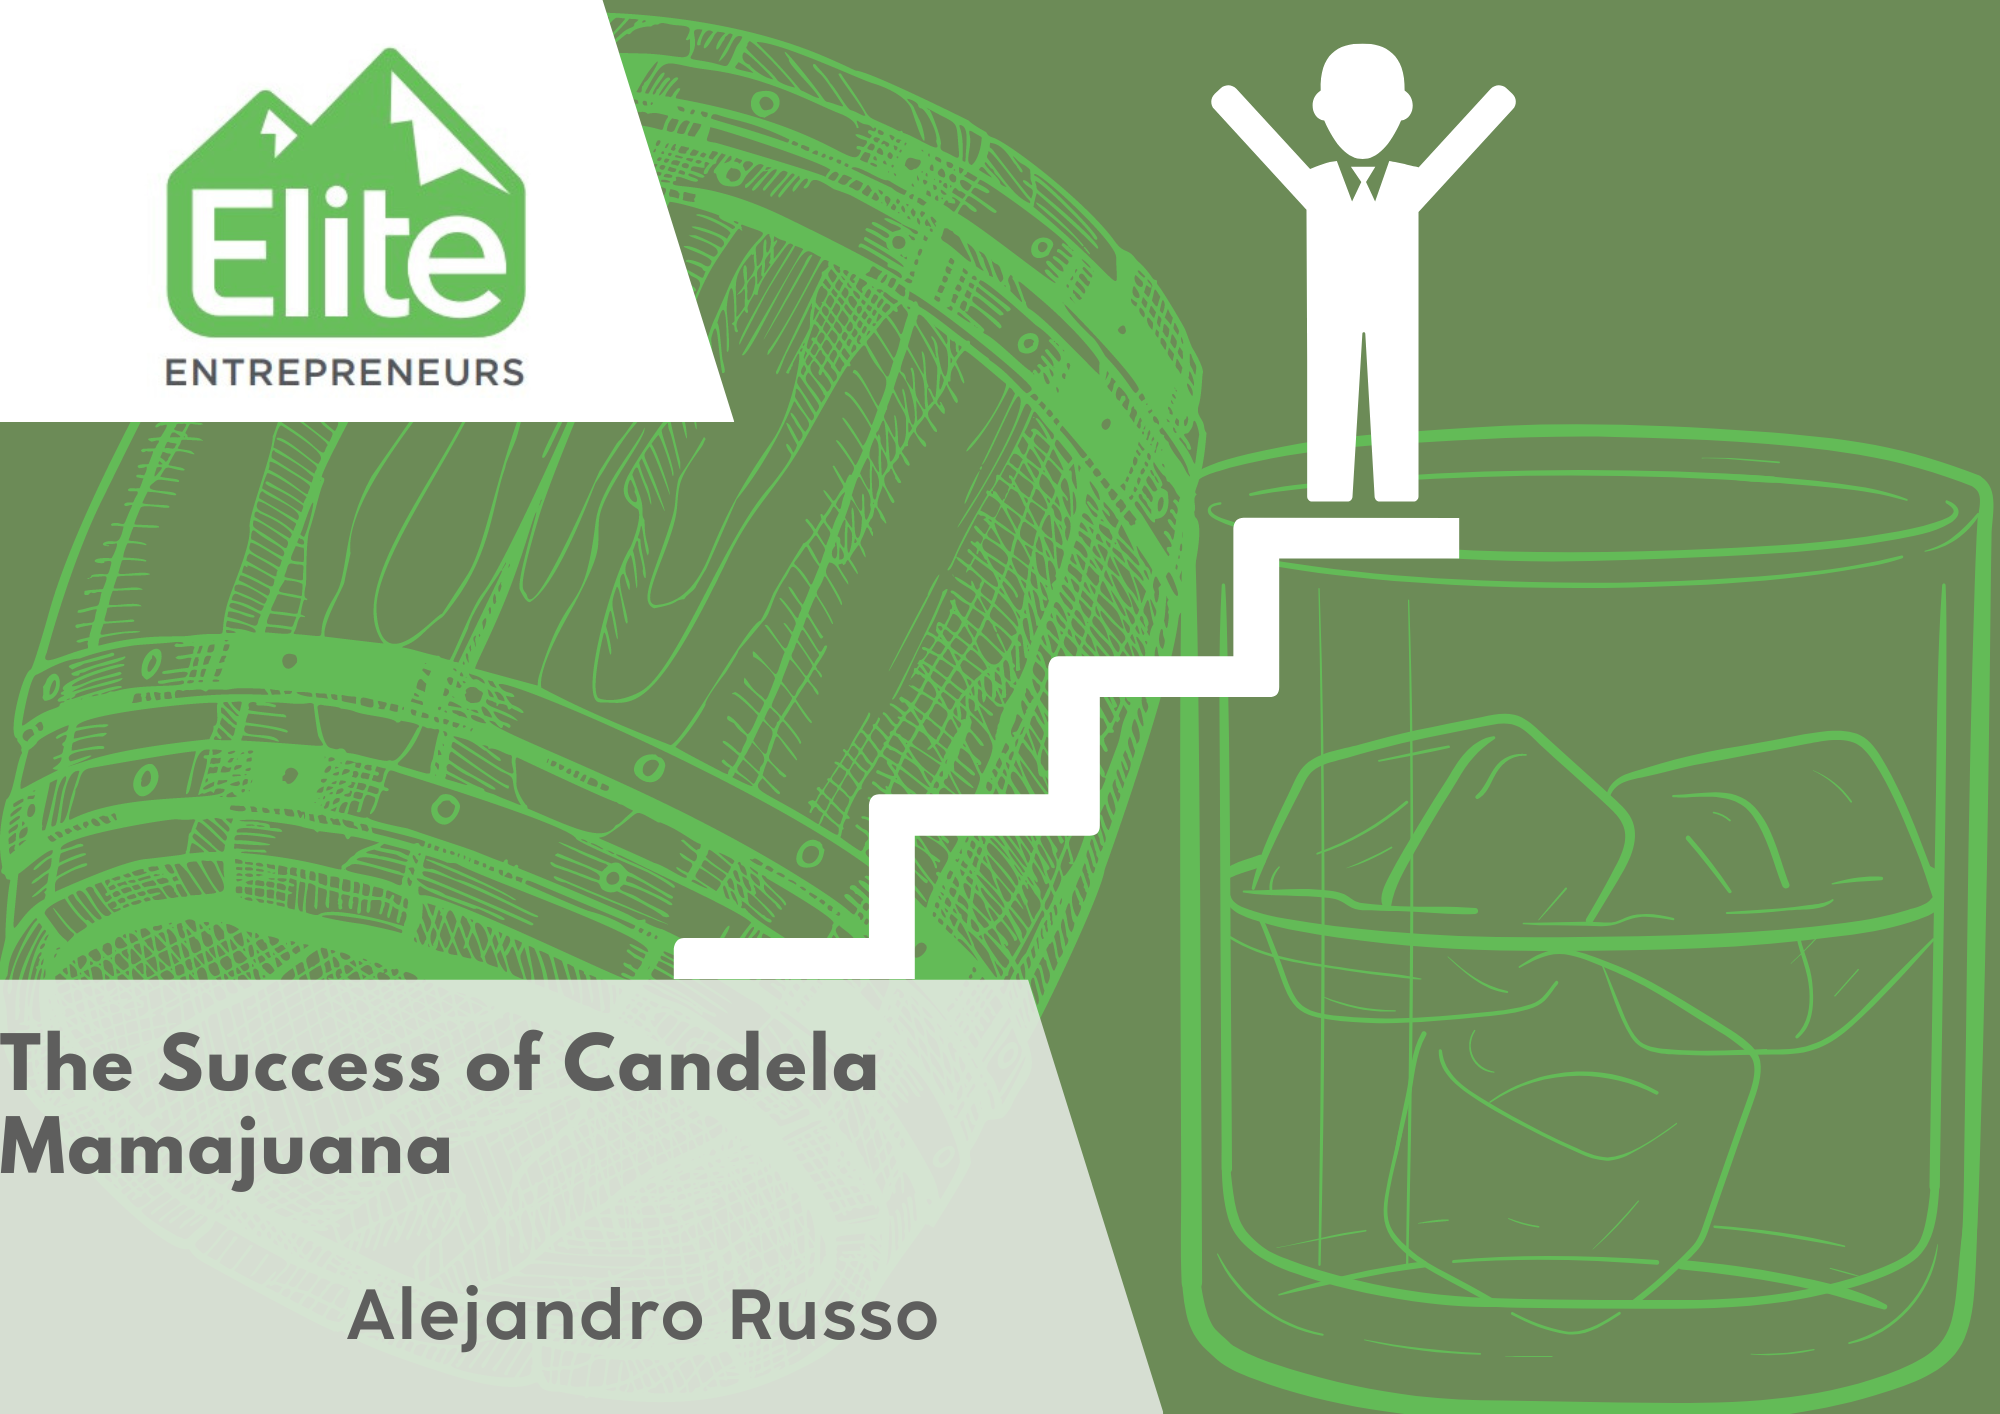 Alejandro Russo and the Success of Candela Mamajuana